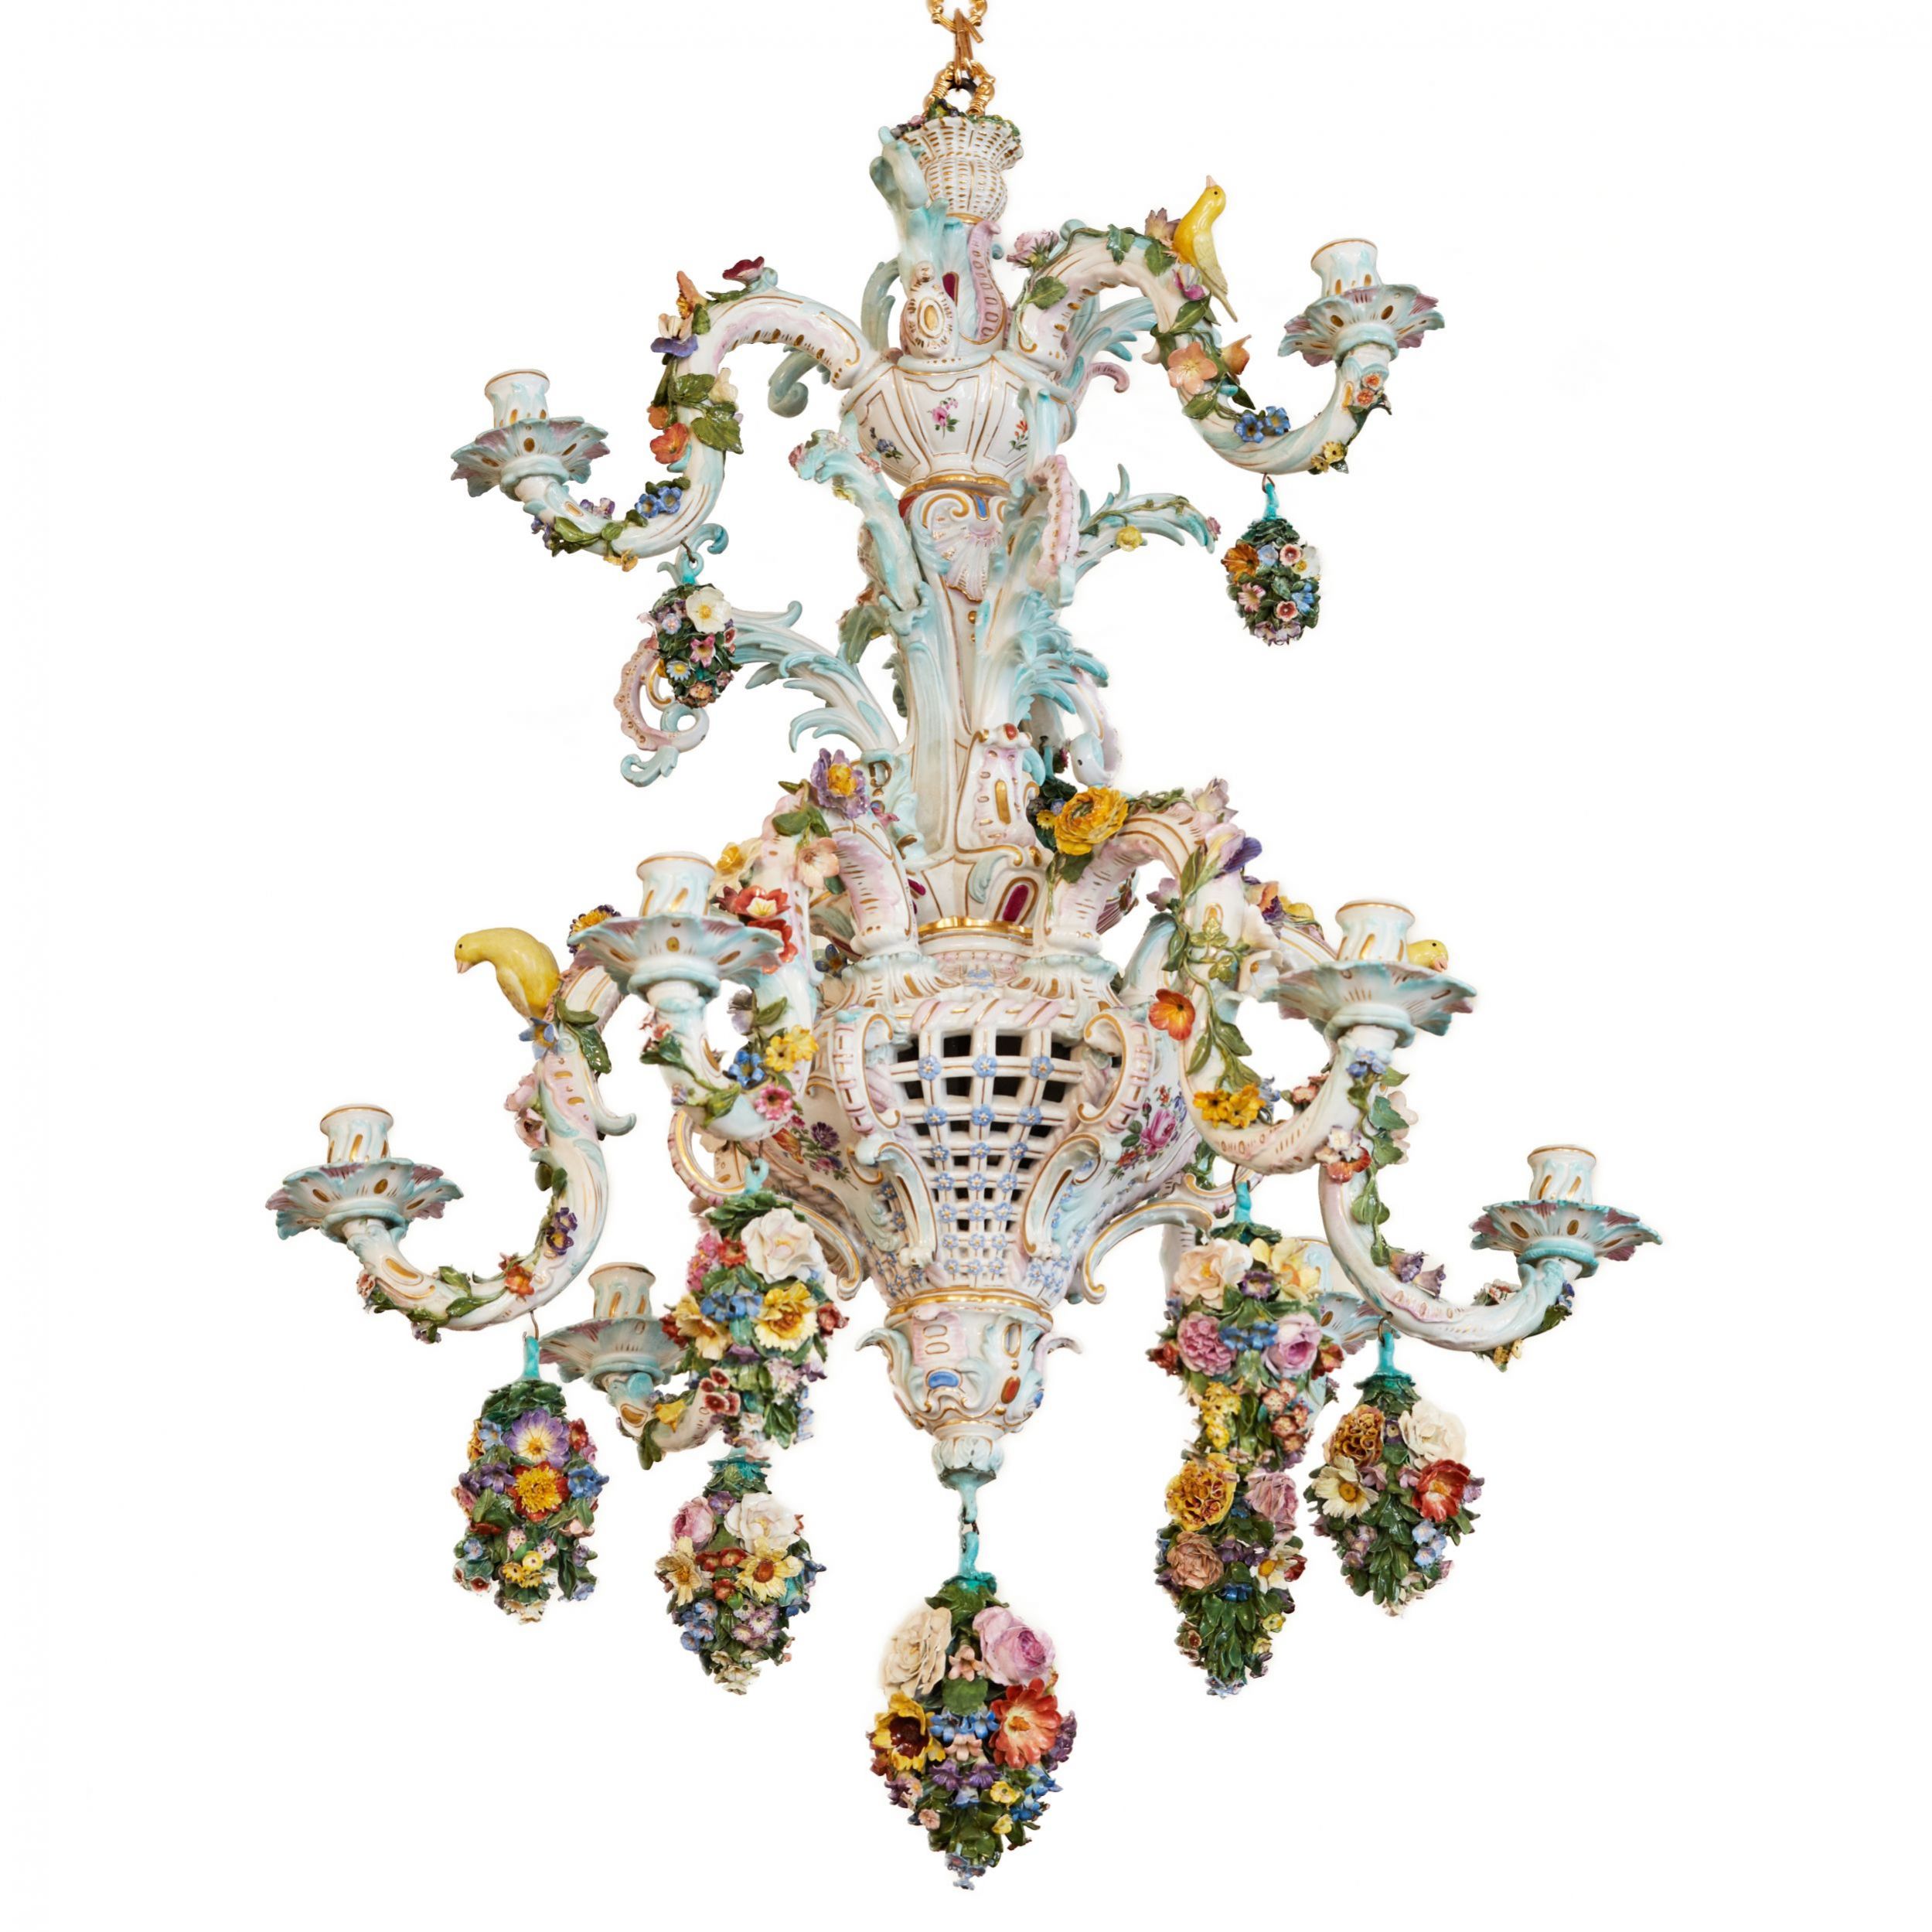 Delightful-porcelain-chandelier-Meissen-1790-from-the-residence-of-King-Alfonso-XIII-in-Biarritz